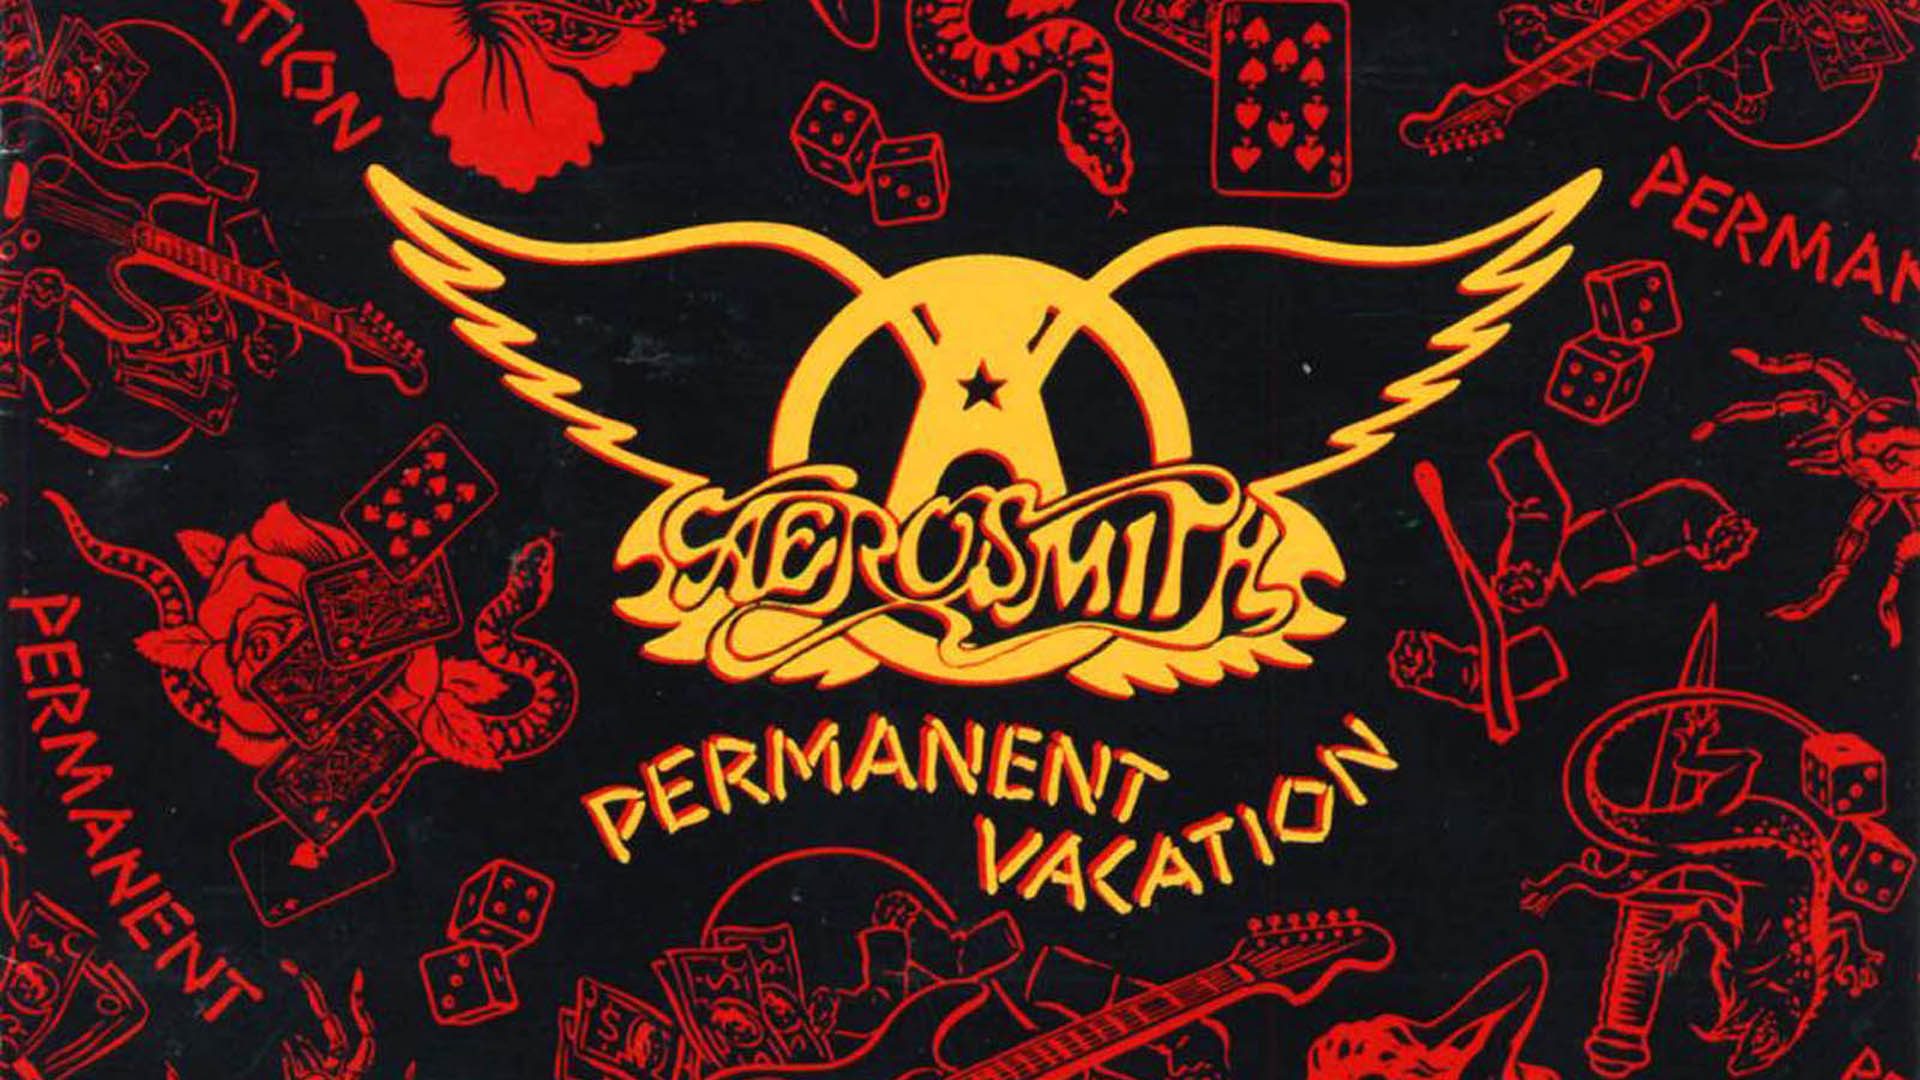 Aerosmith Hd Wallpaper Pixelstalknet